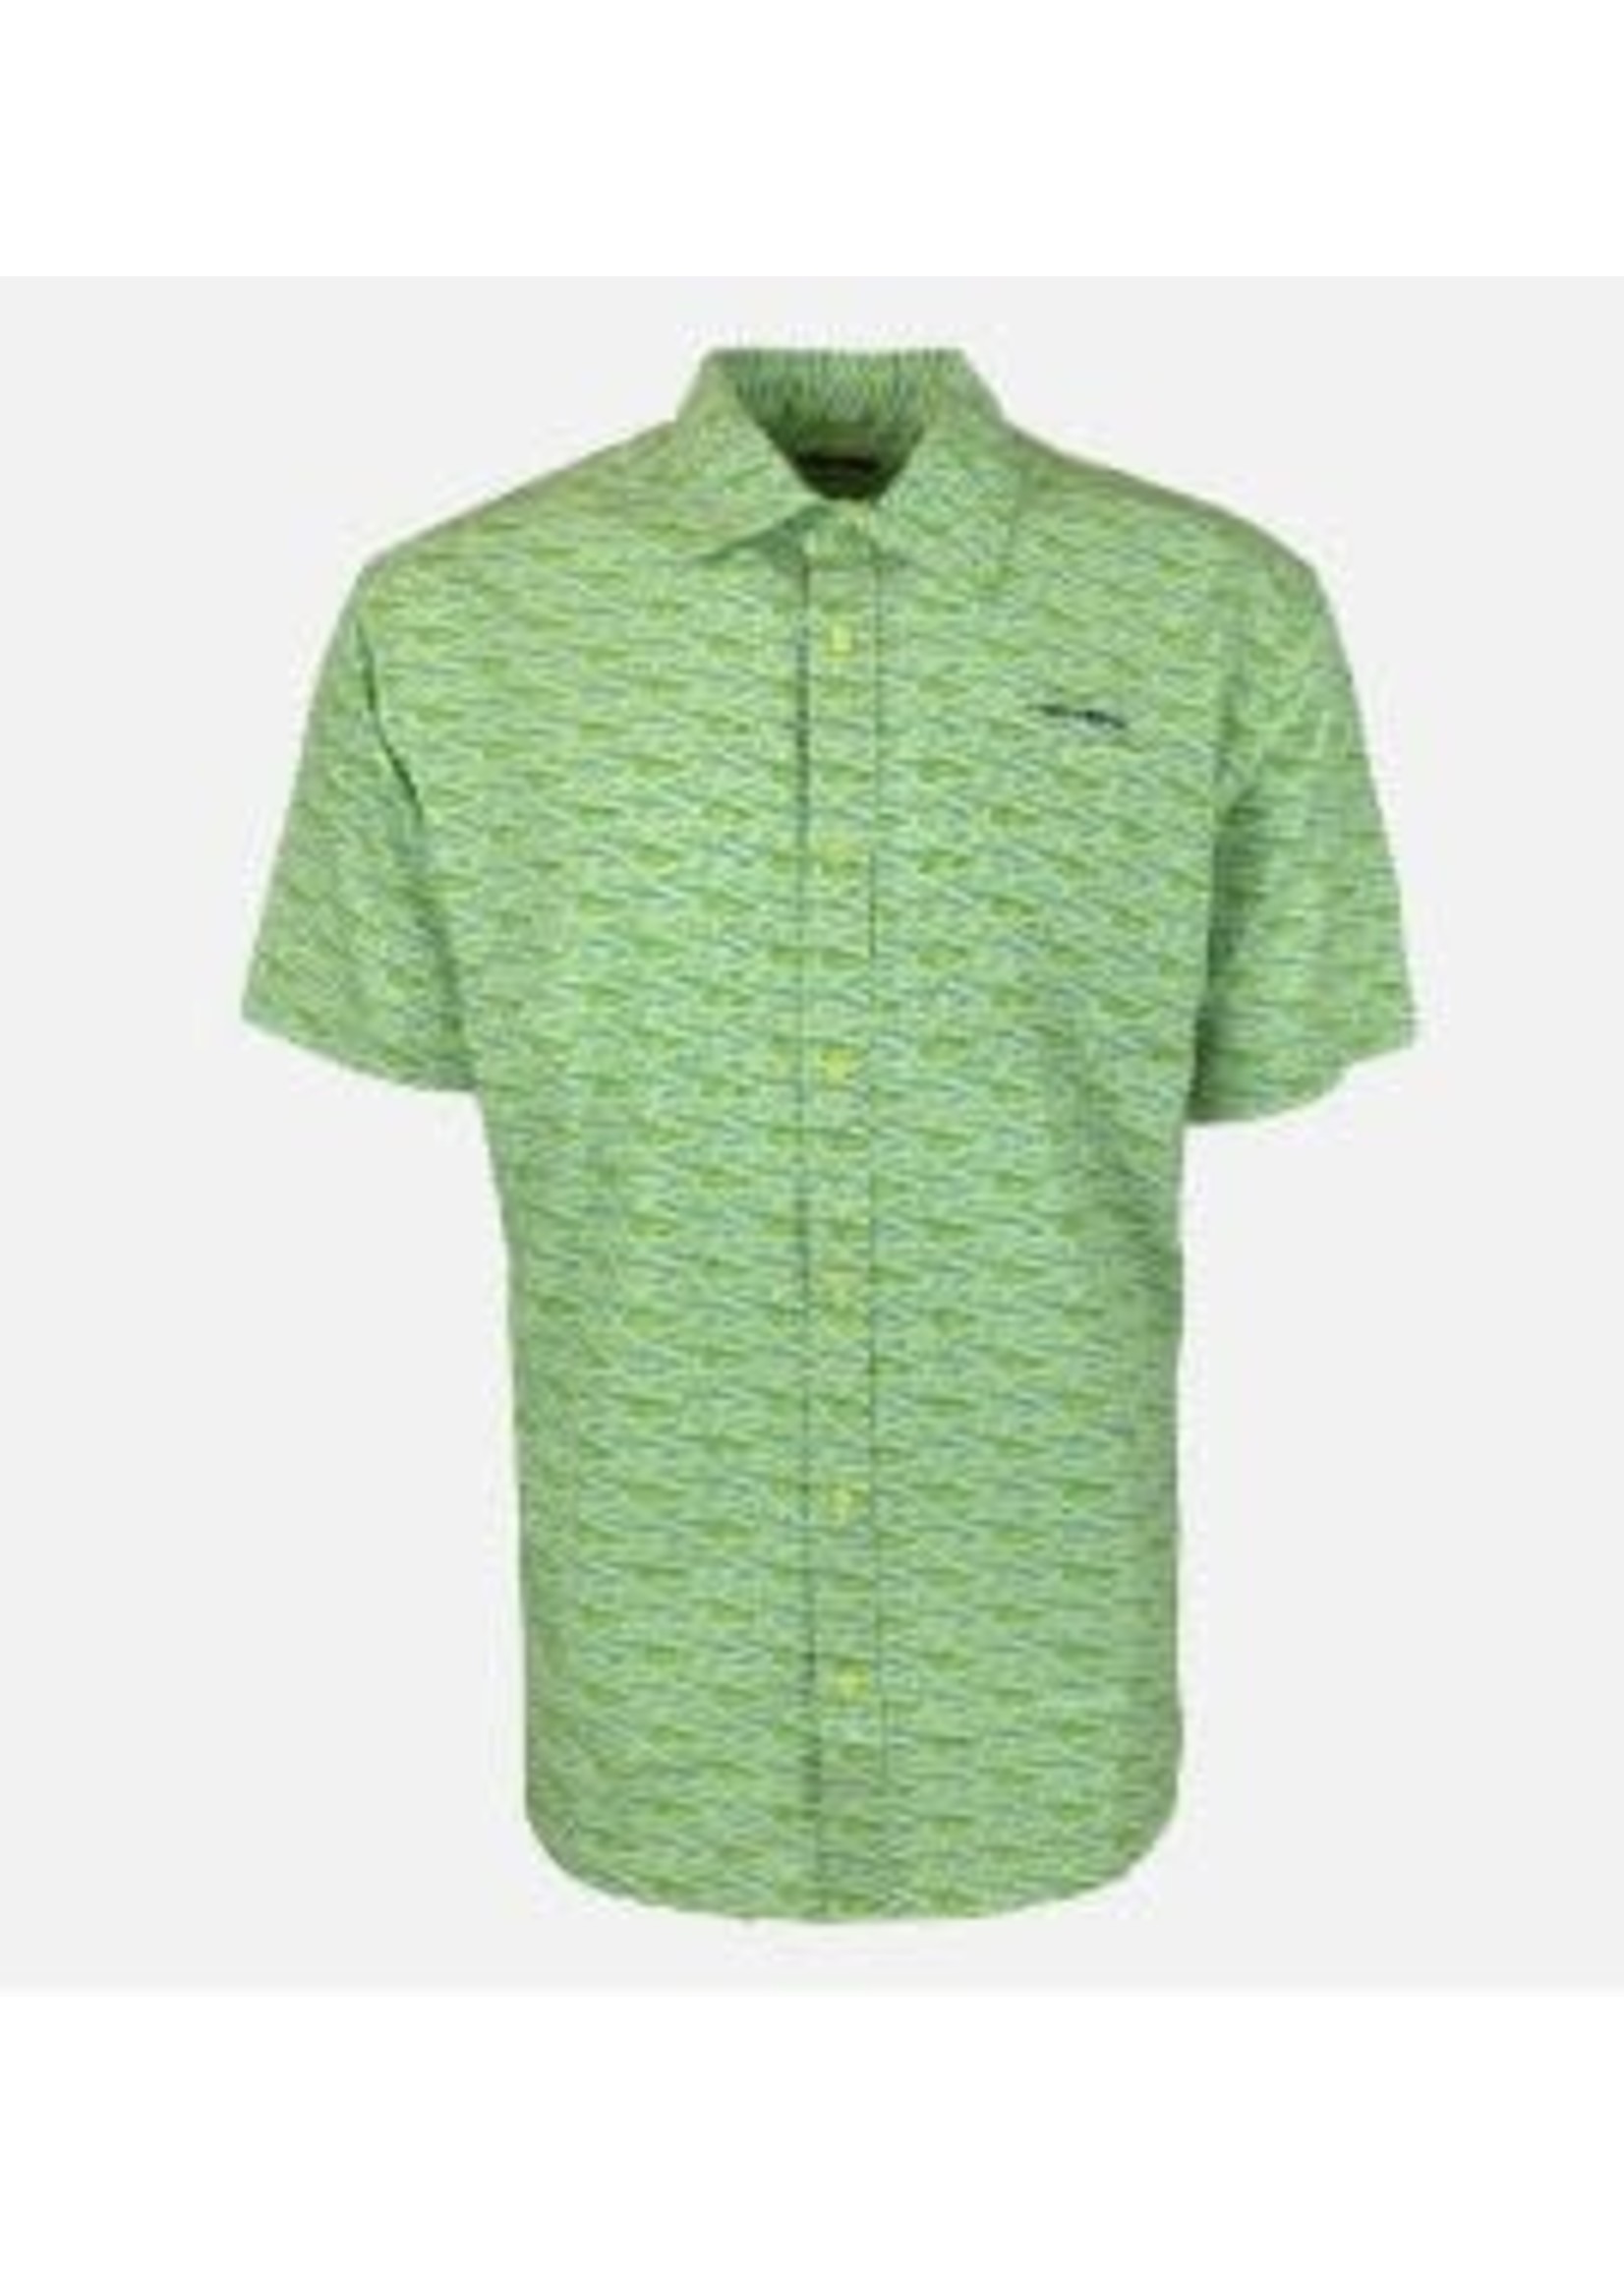 Heybo Outdoors Island Hopper Mahi-Mahi Stamp Short Sleeve Shirt